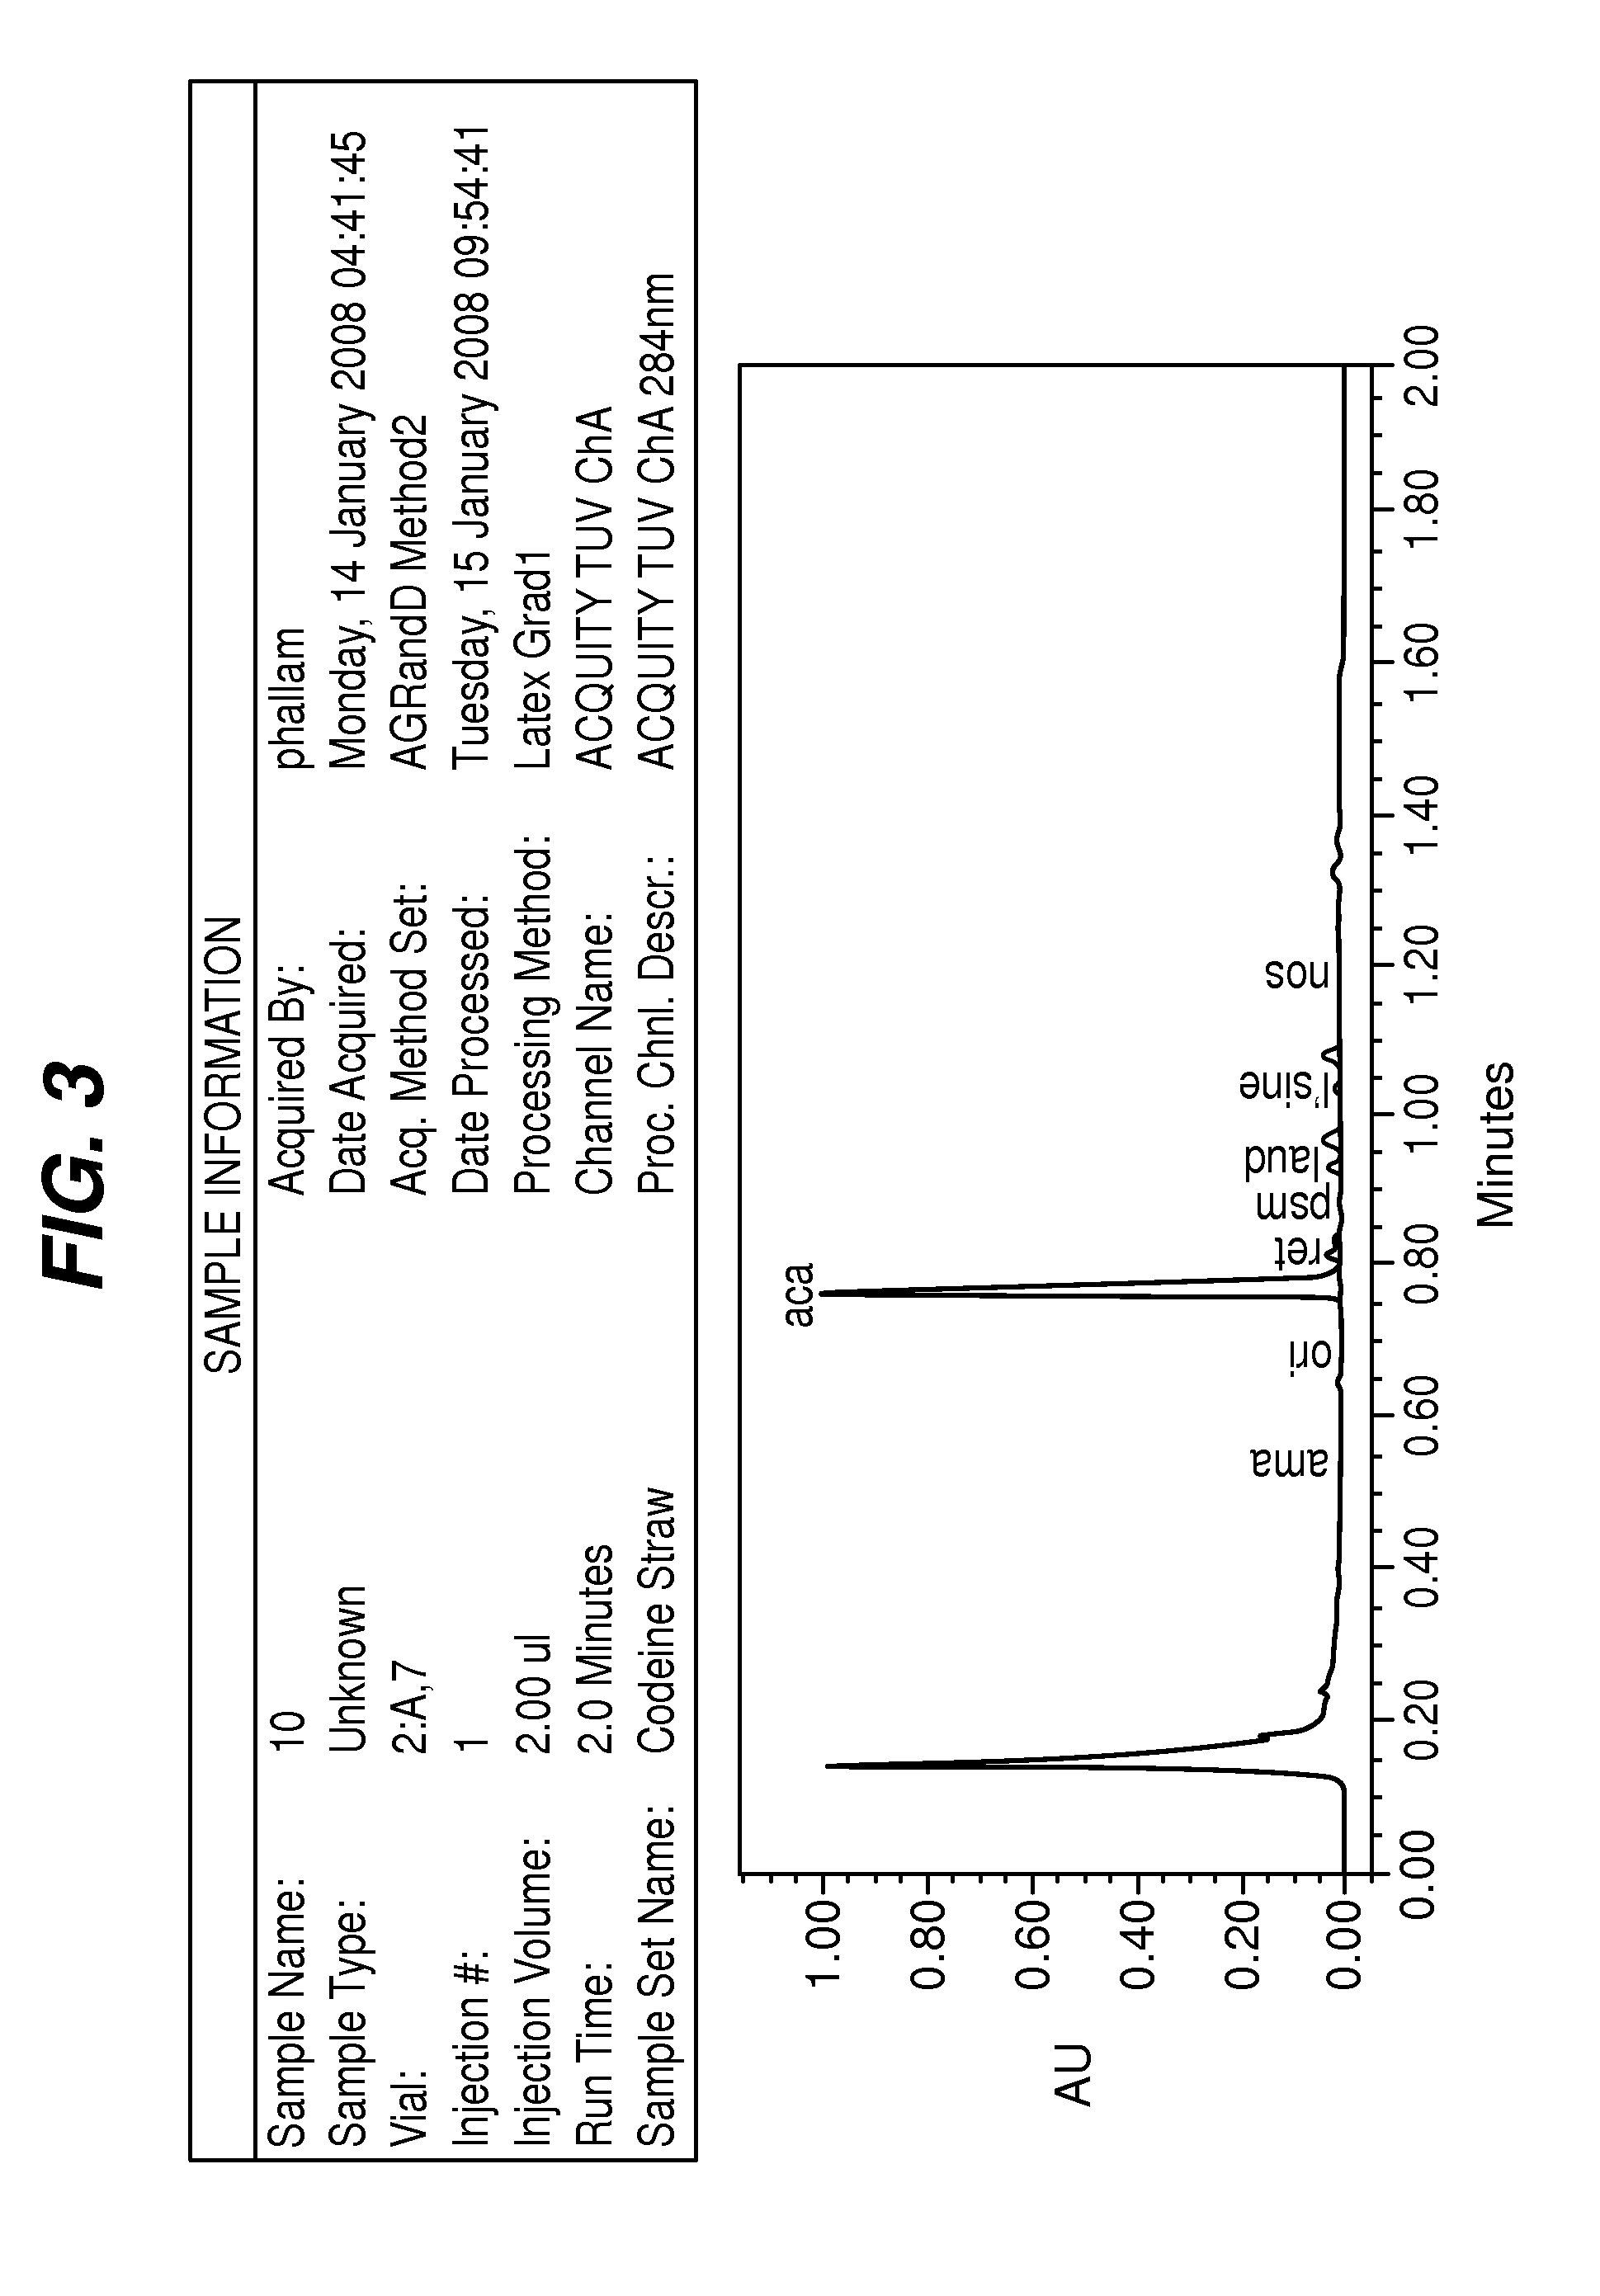 Papaver somniferum with high concentration of codeine